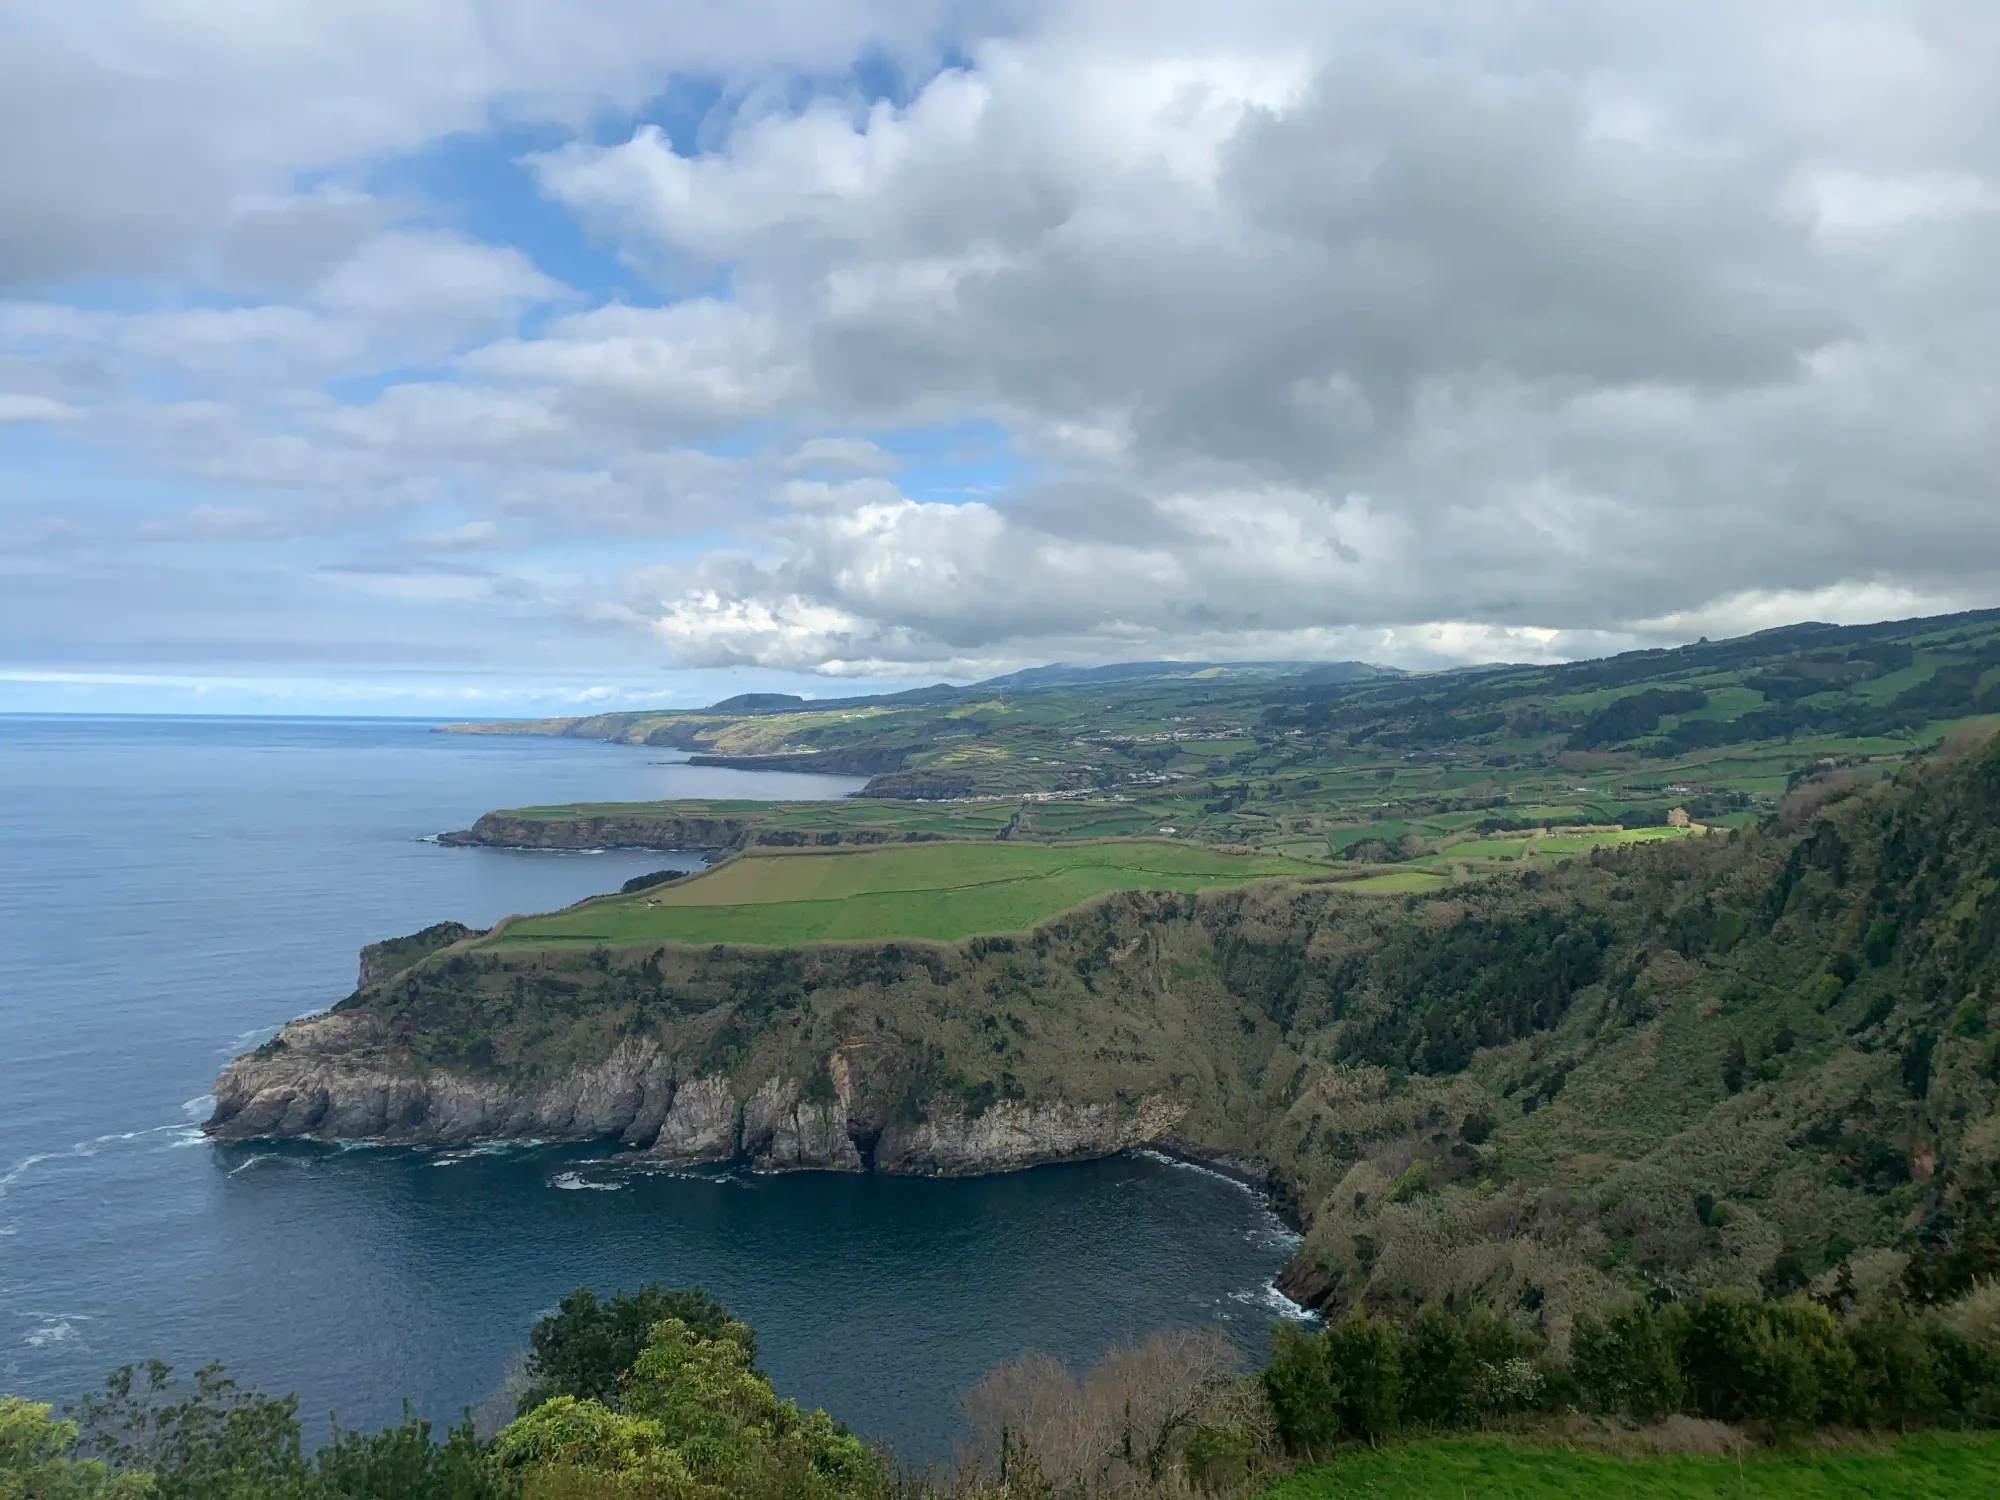 Miradouro in the Azores